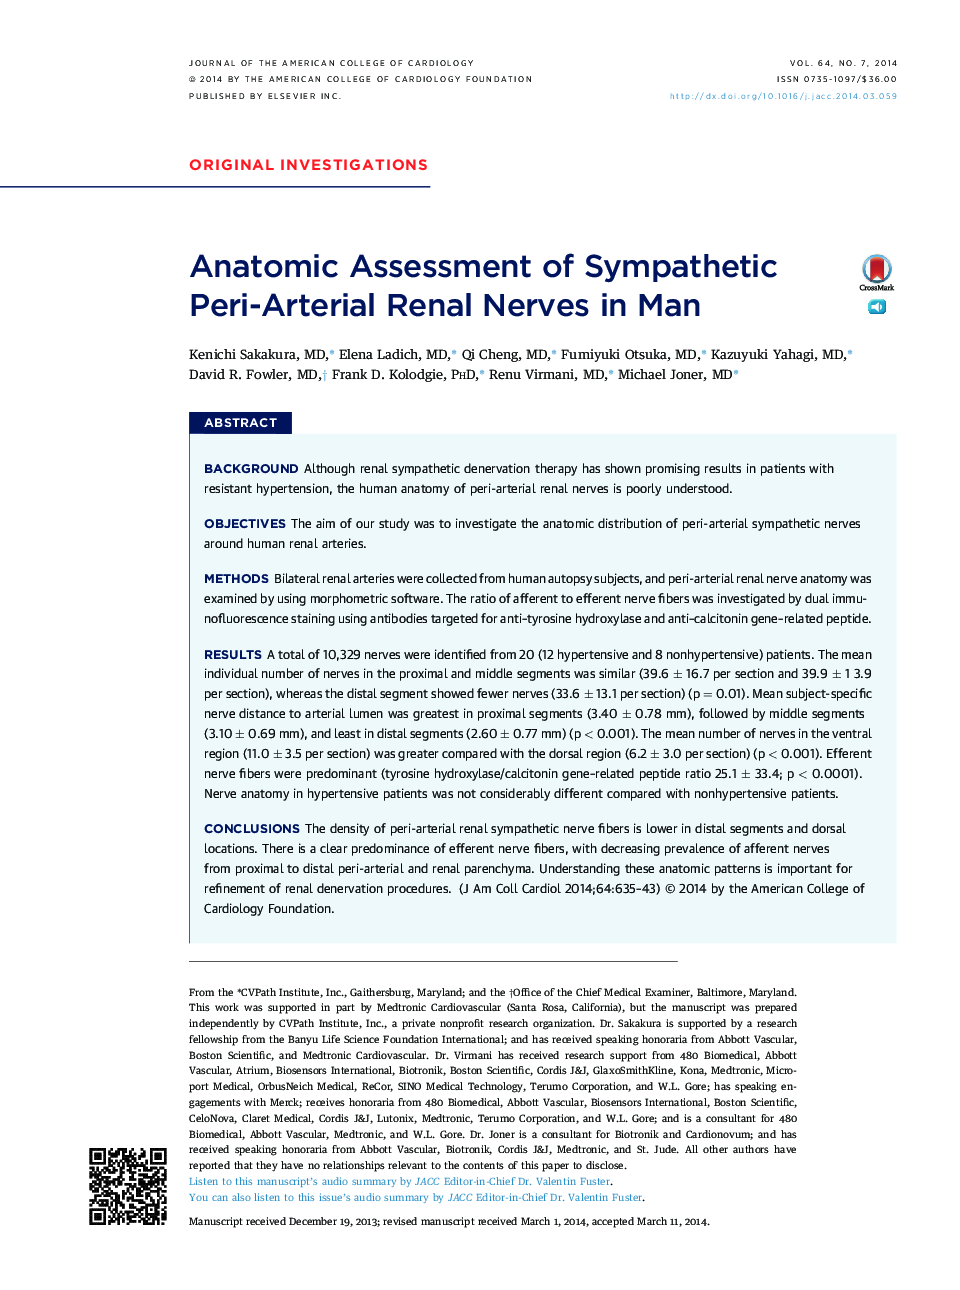 Anatomic Assessment of Sympathetic Peri-Arterial Renal Nerves in Man